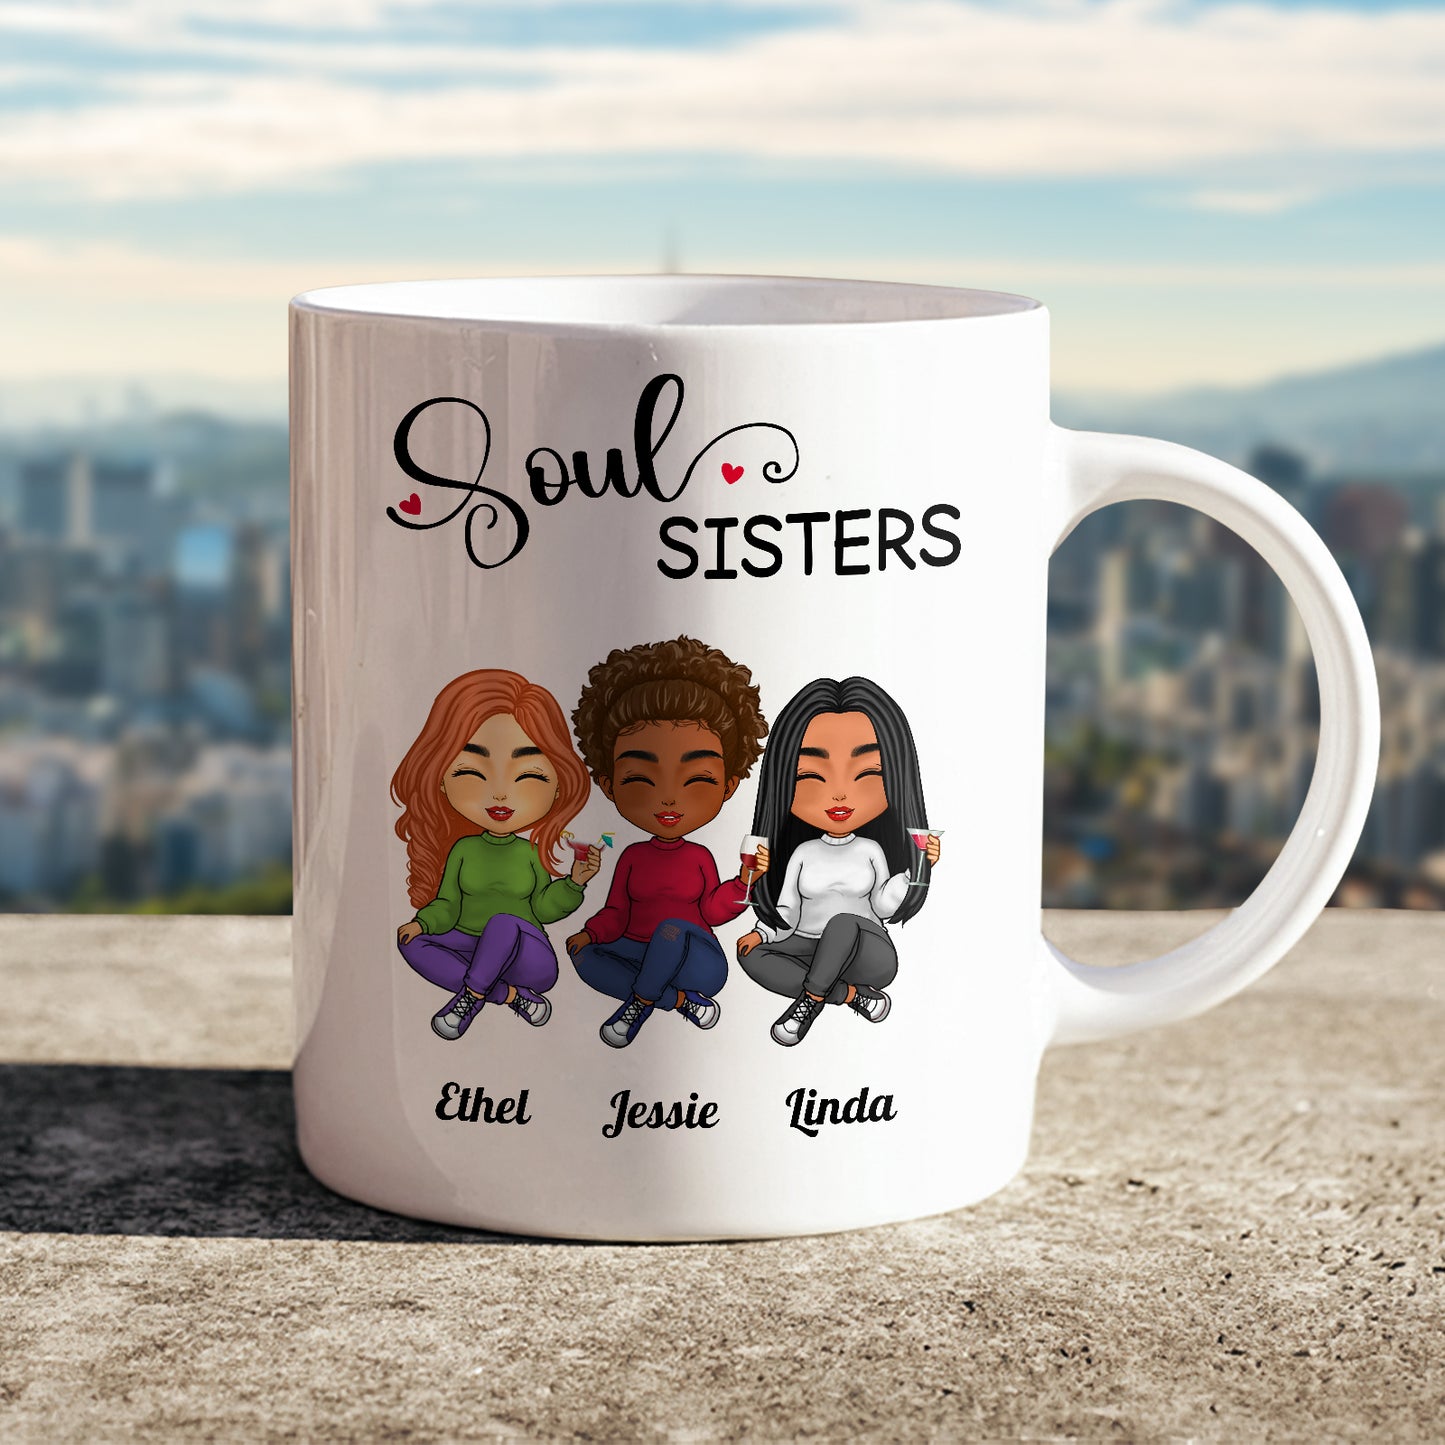 Besties - Soul Sisters - Personalized Mug